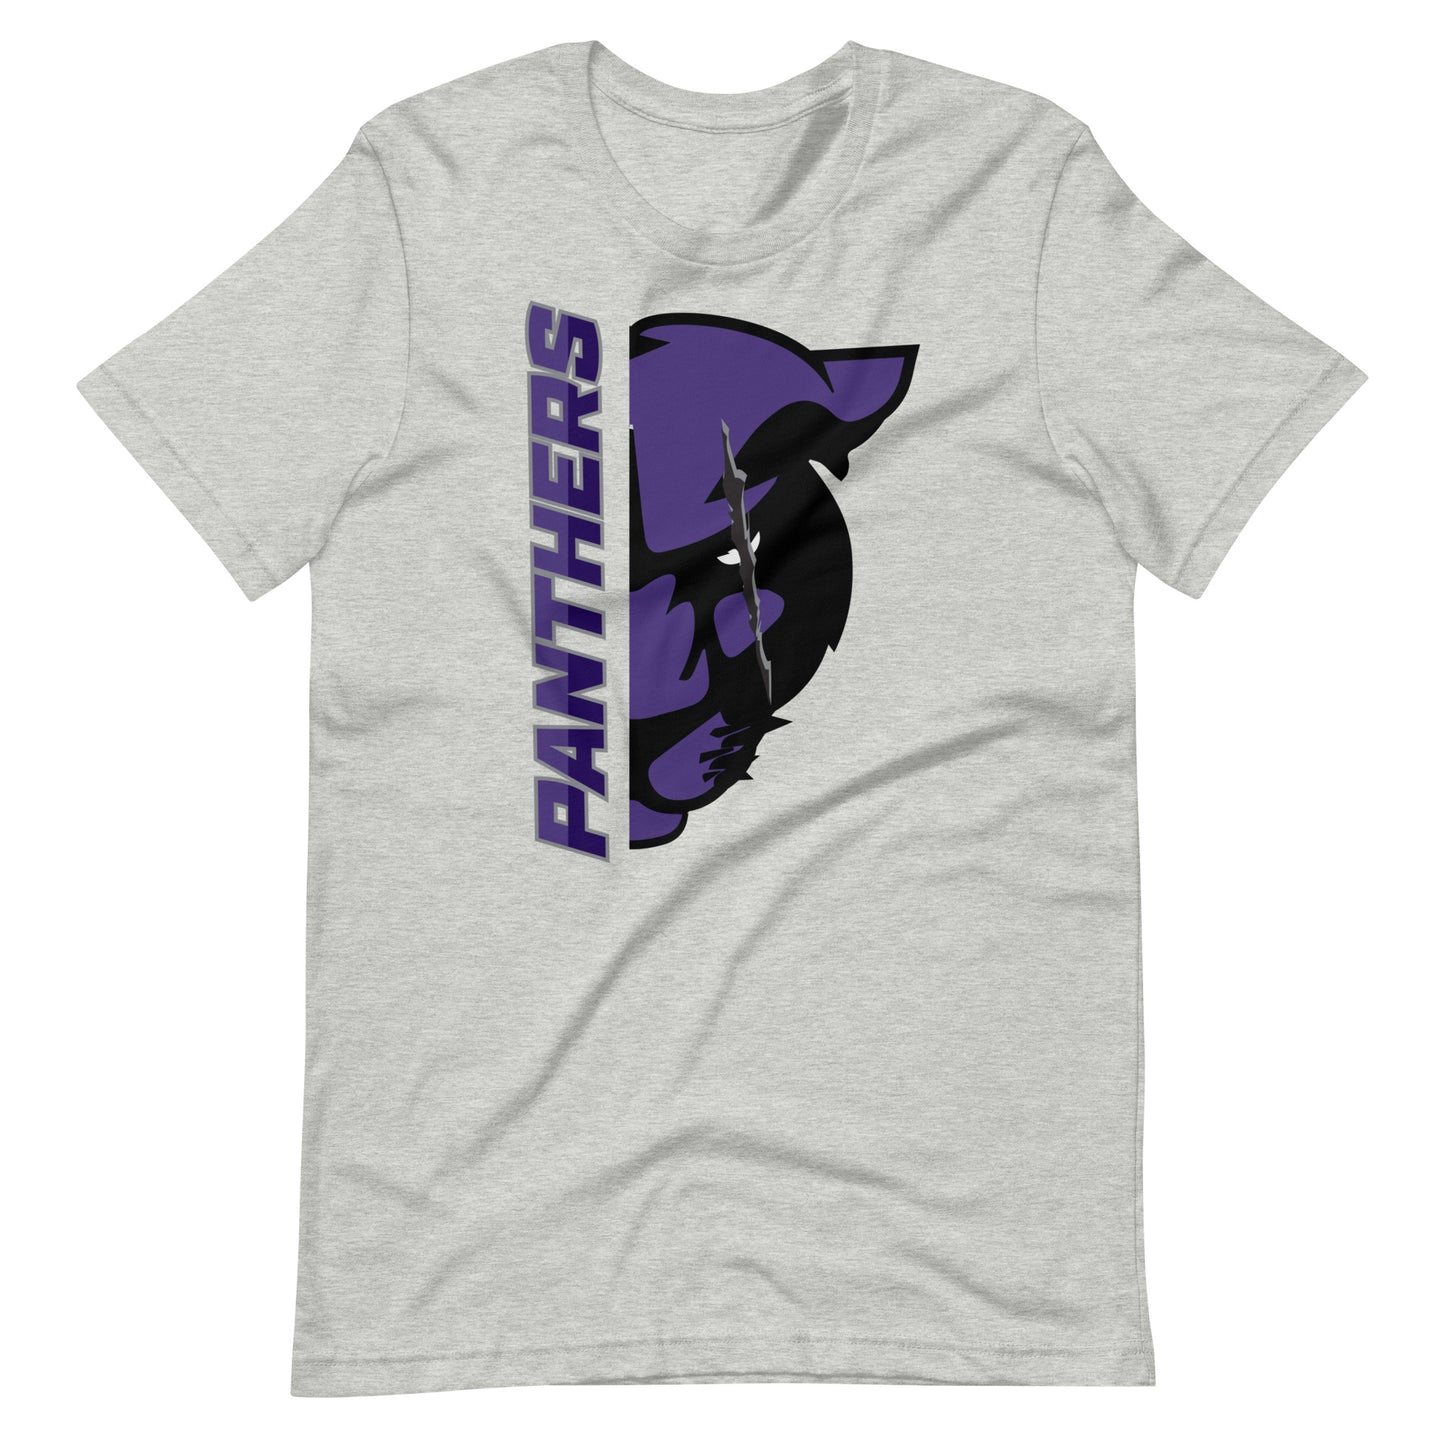 panthers t-shirt